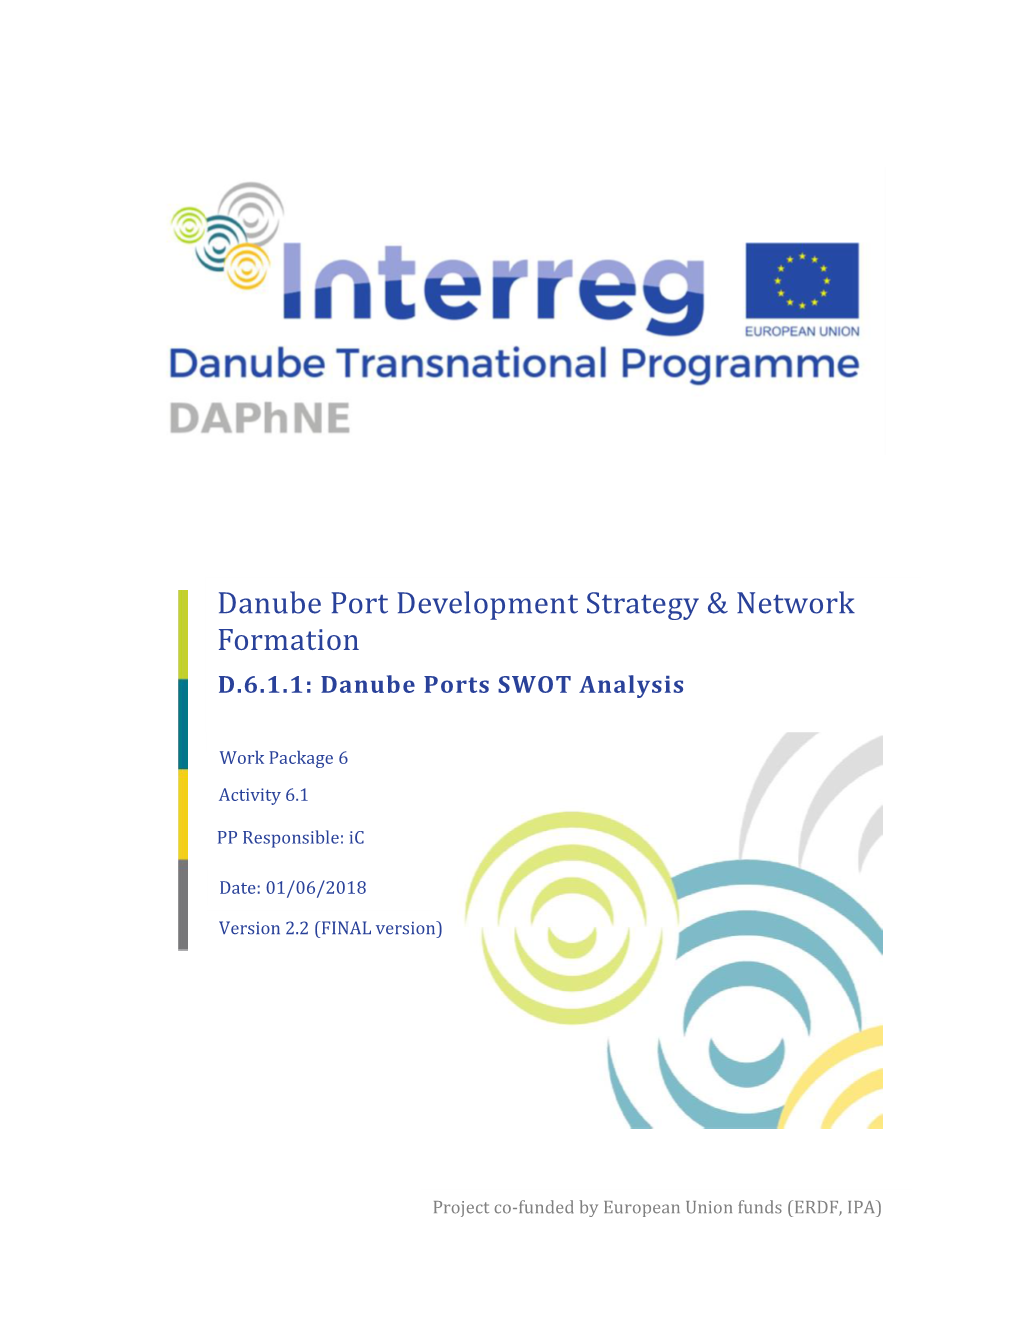 Danube Port Development Strategy & Network Formation